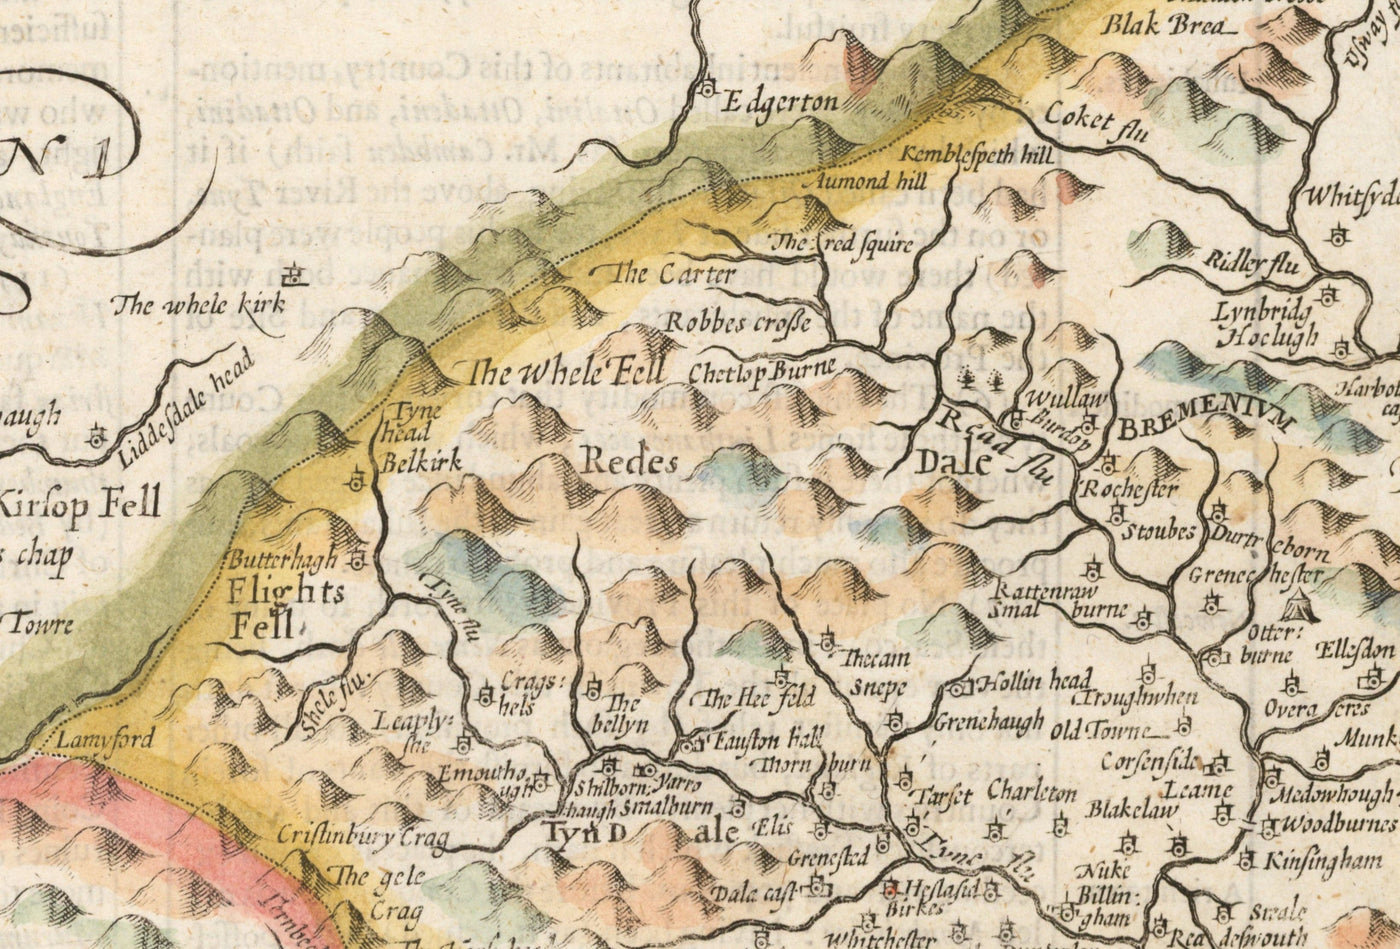 Viejo mapa de Northumberland en 1611 por John Speed ​​- Newcastle, Gateshead, la pared de Hadrian, Tyne y Wear